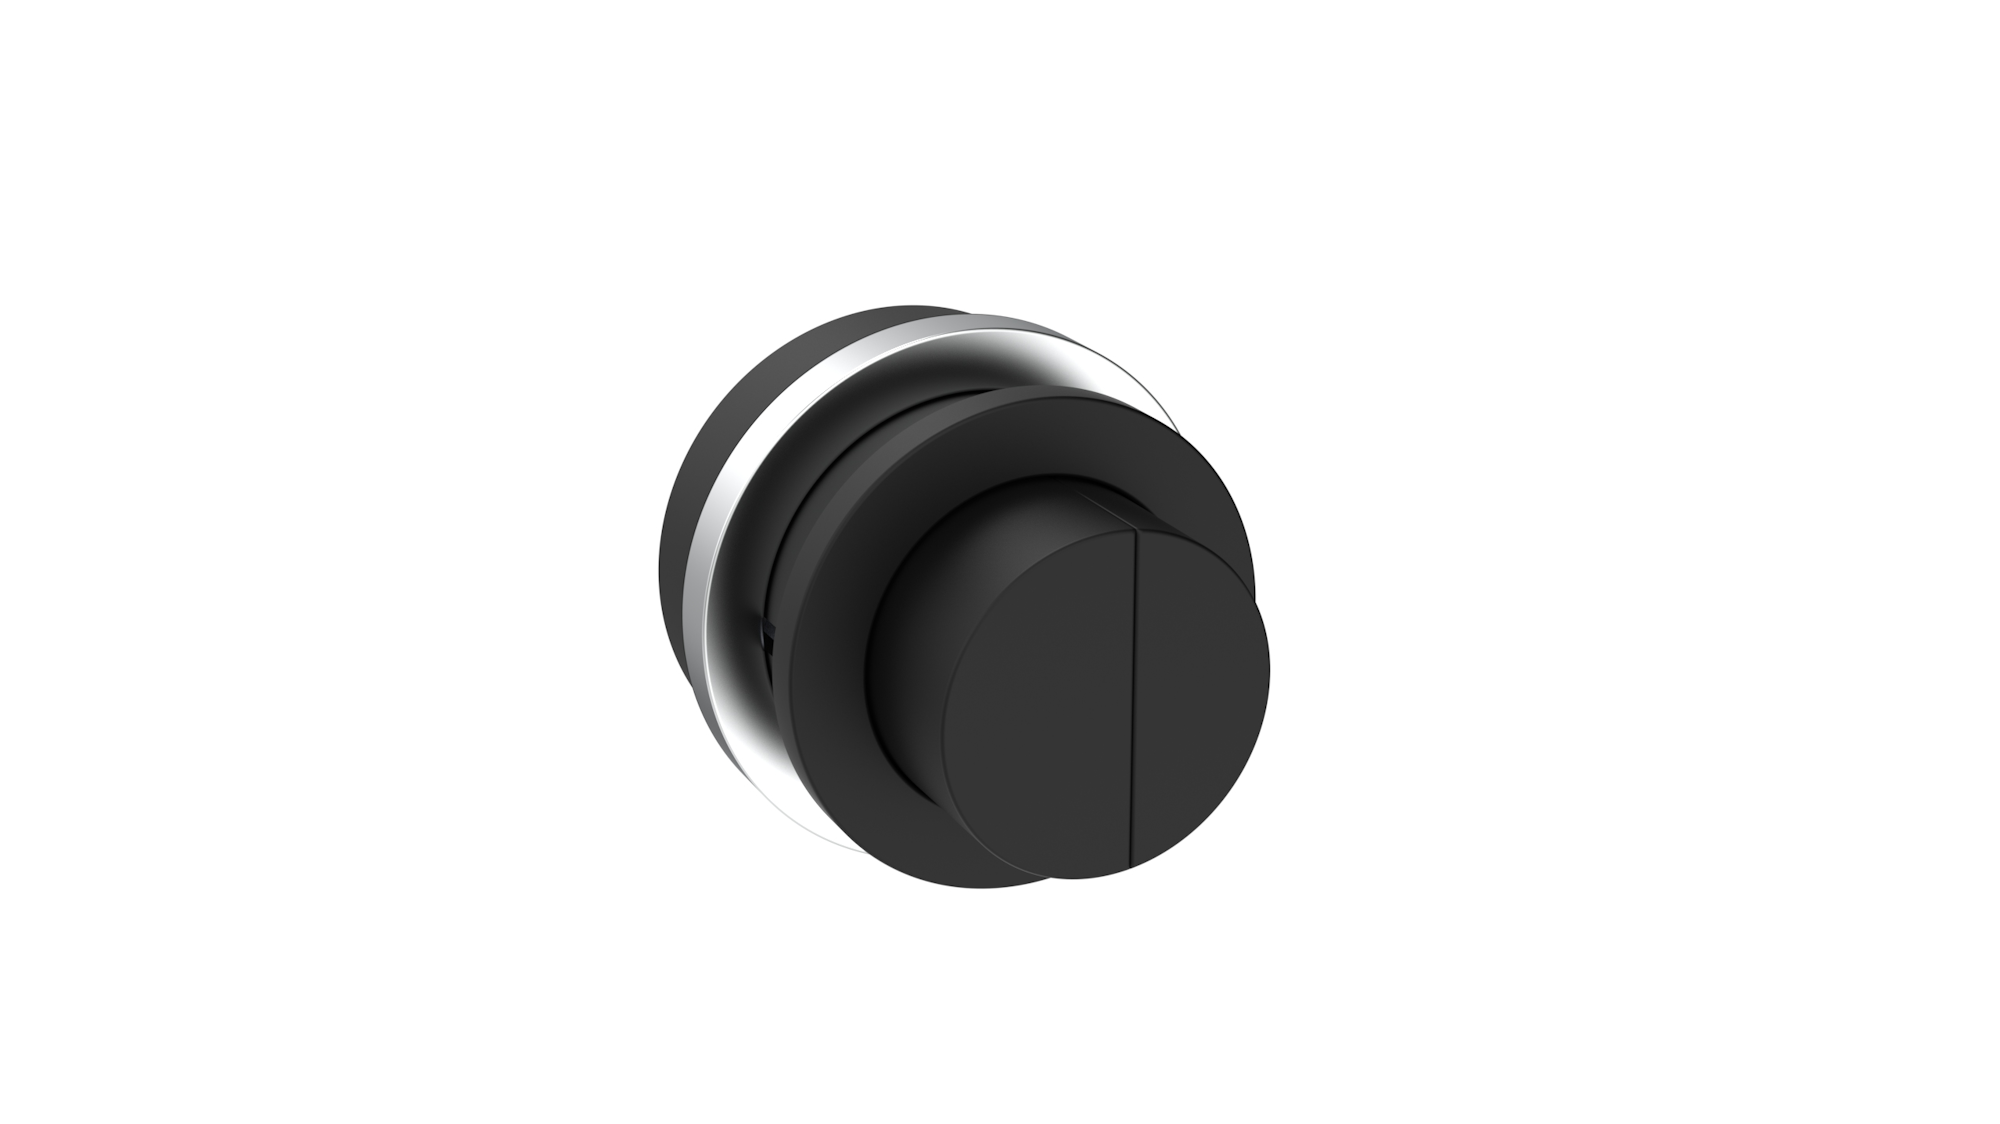 FLUSHE 2.0 brass flush button (for HC2030) - Matte Black - Electroplated